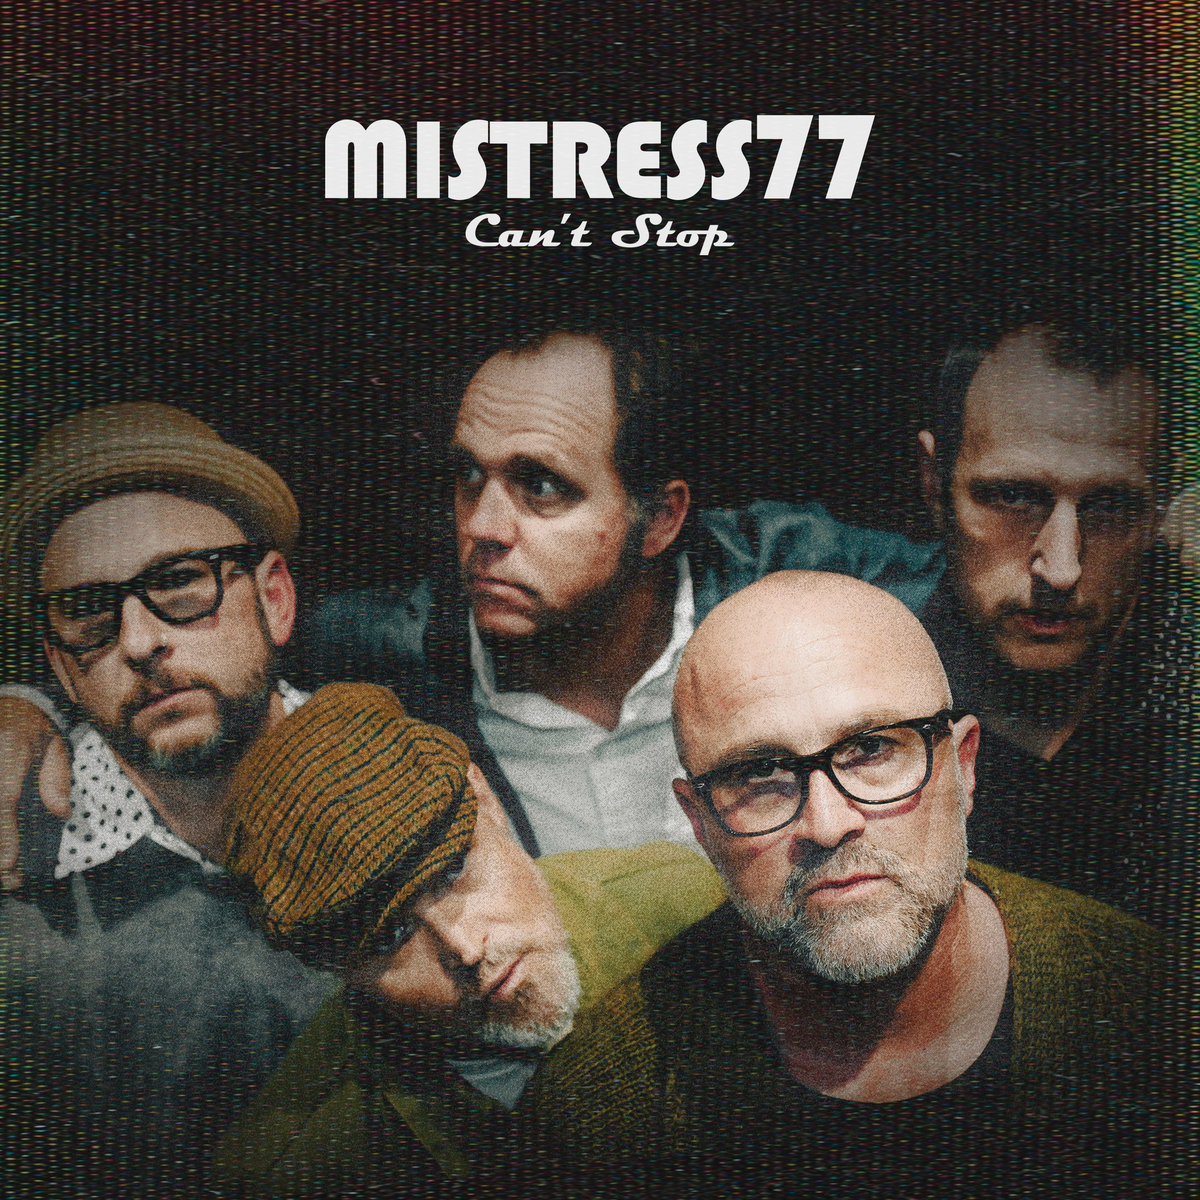 Album Review: Mistress 77 “Can’t Stop”